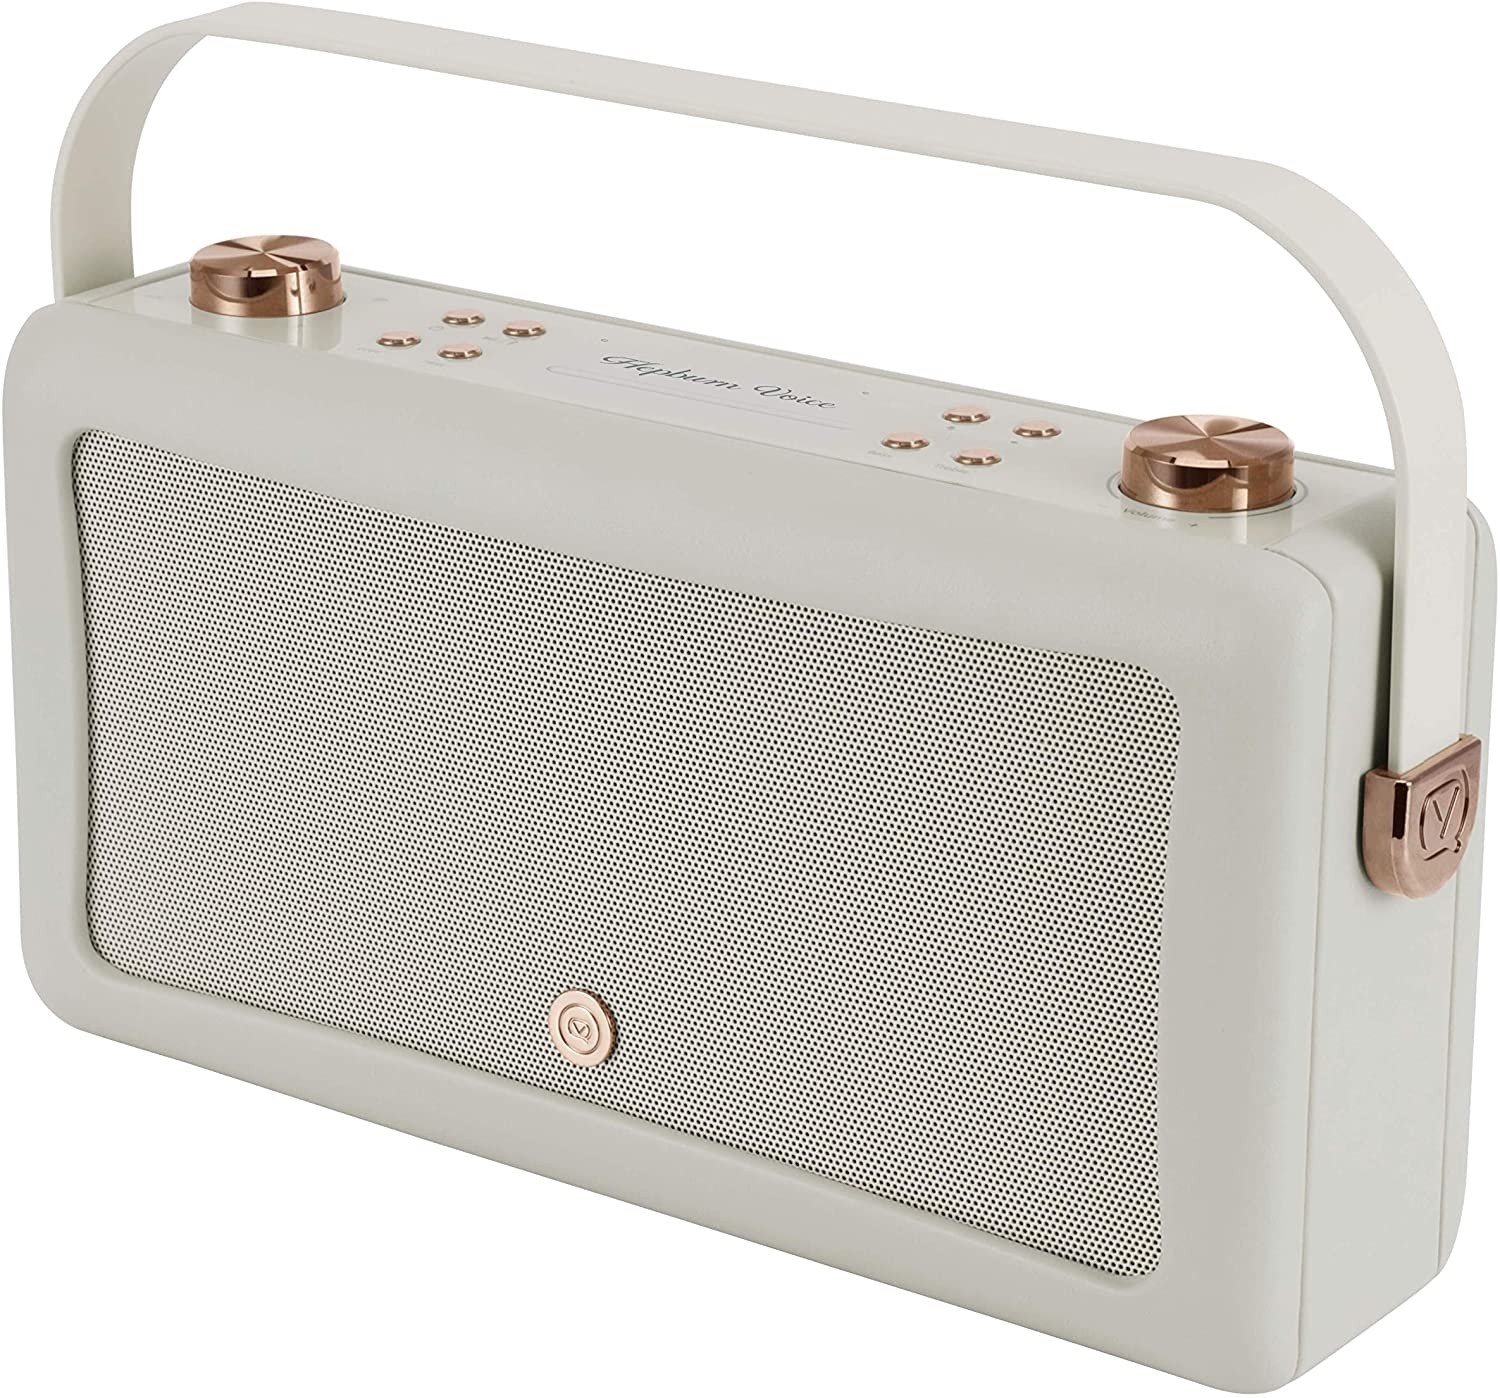 Hepburn Voice by VQ – with Amazon Alexa Voice Control & Portable Bluetooth Speaker – Grey & Copper